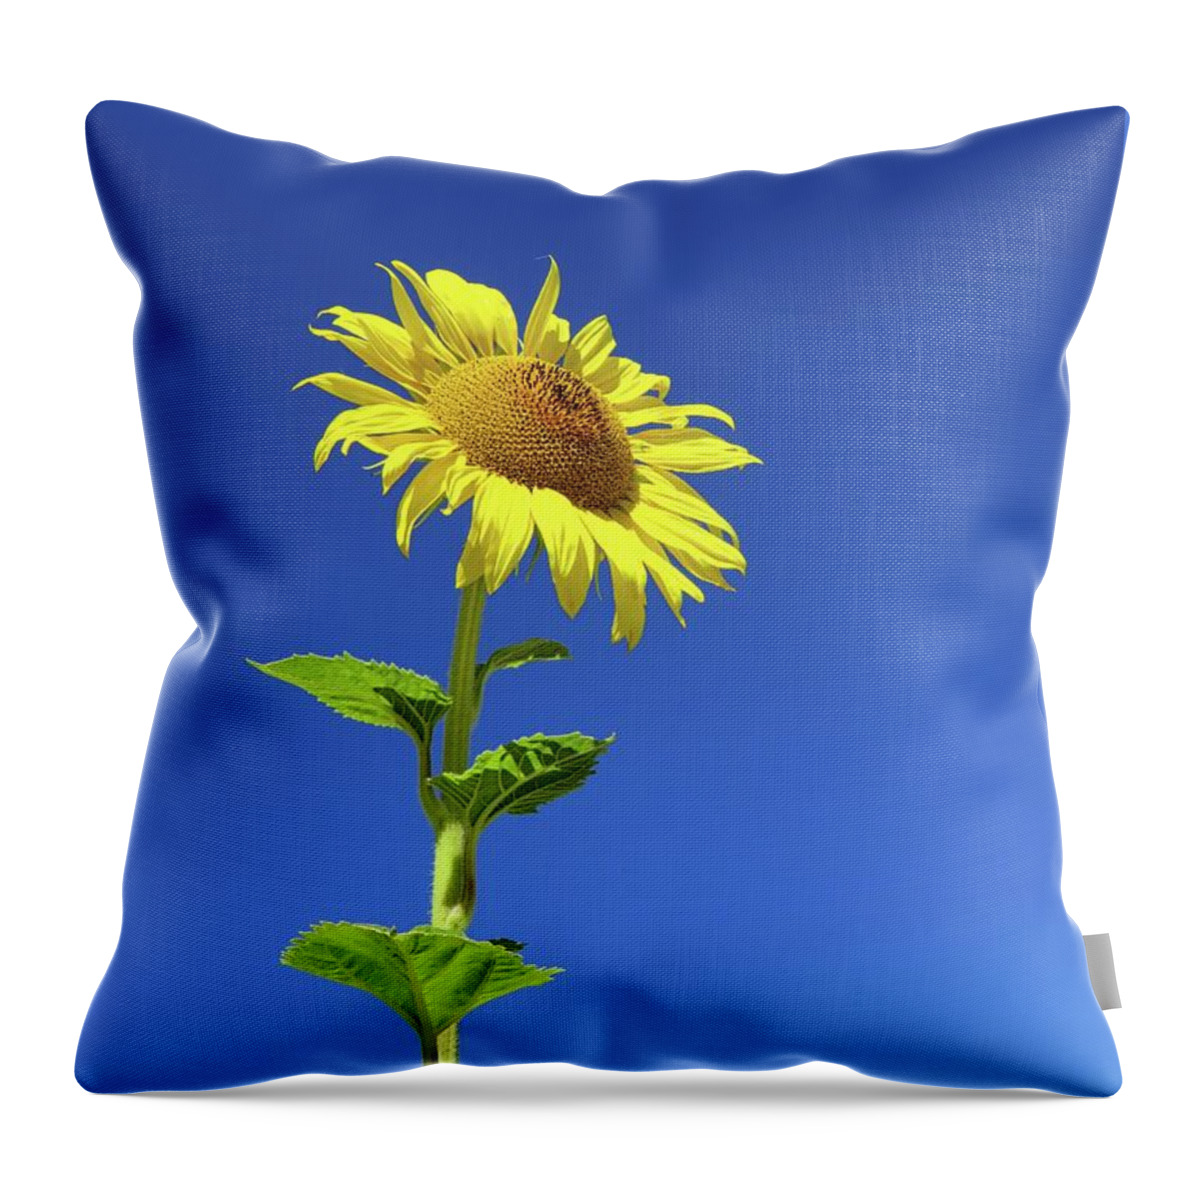 Sunflower Throw Pillow featuring the photograph Tall Sunflower by Connor Beekman